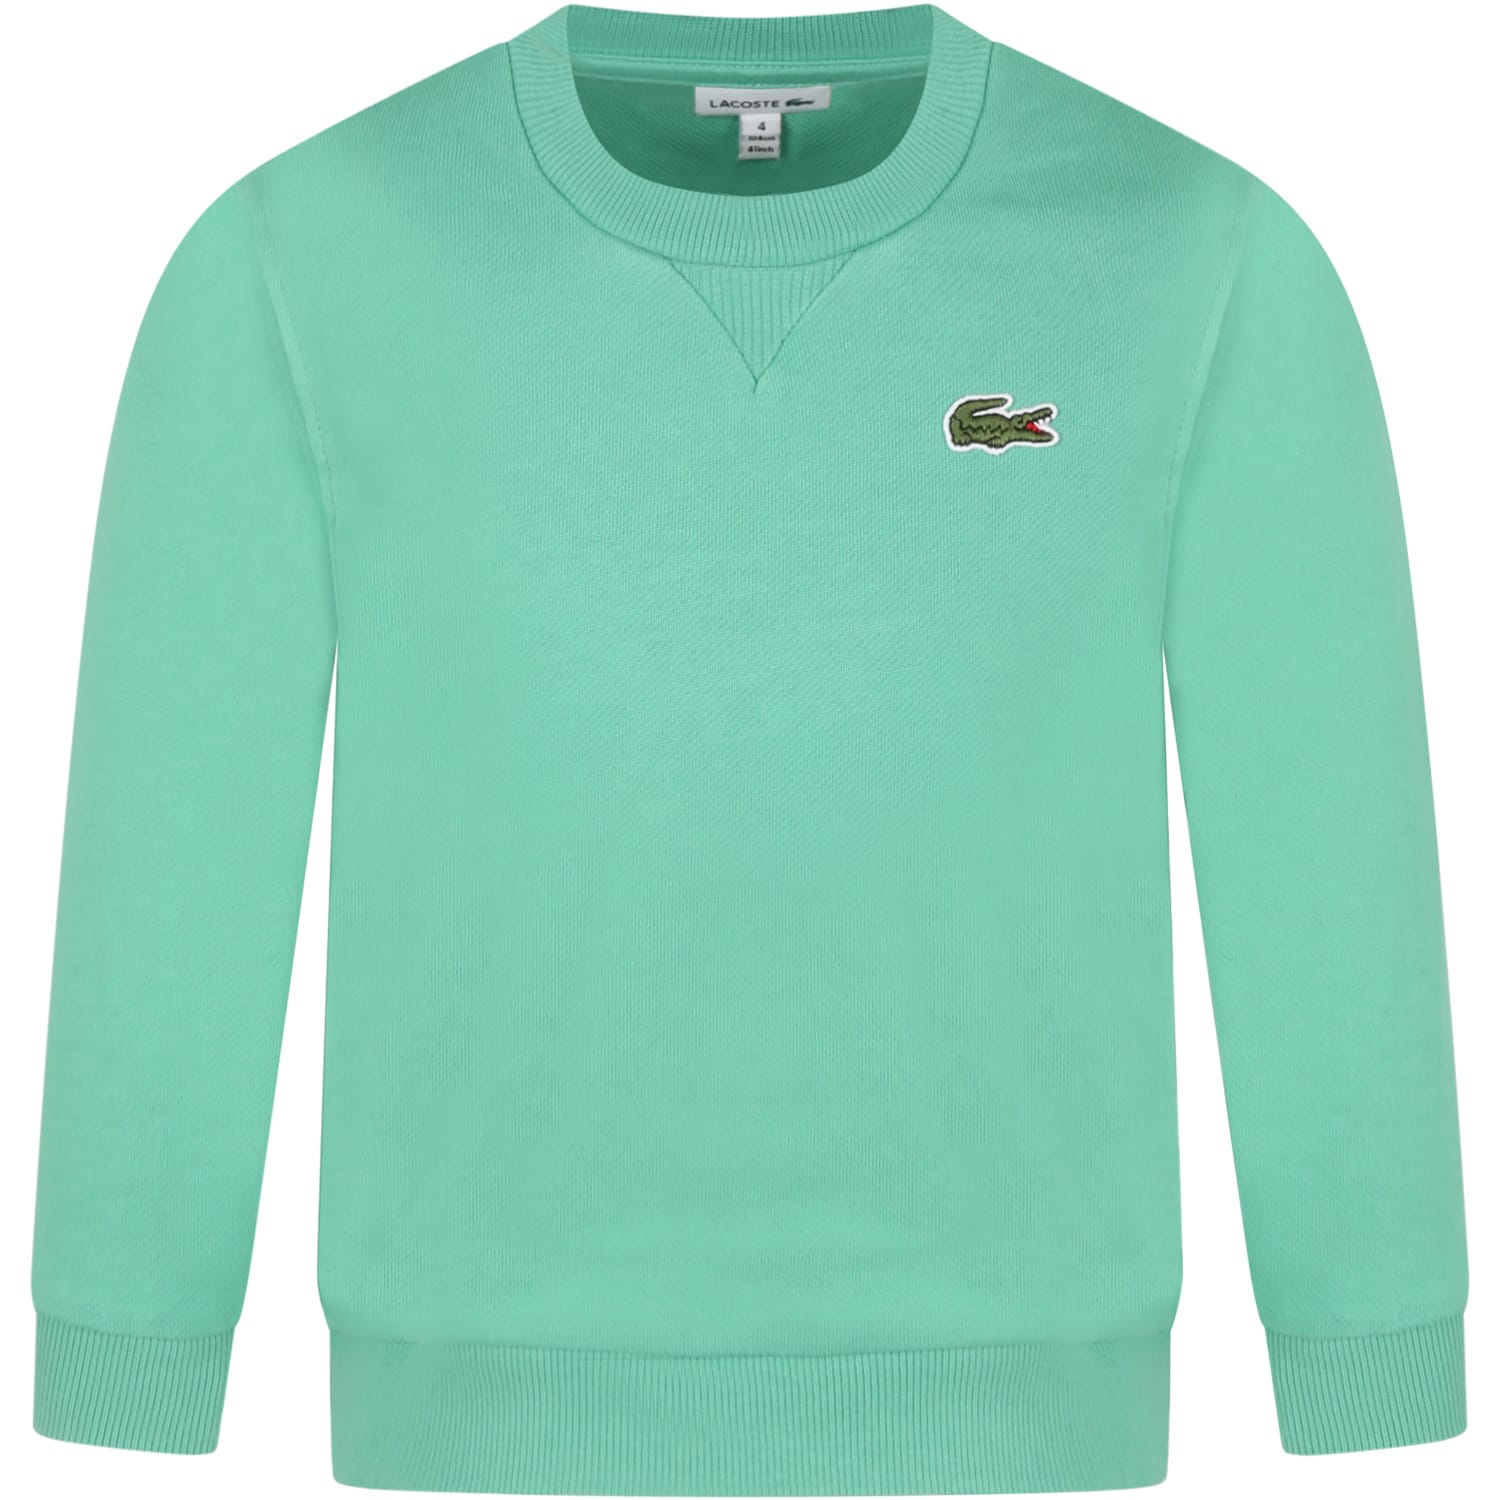 Lacoste Green Sweatshirt For Boy With Crocodile